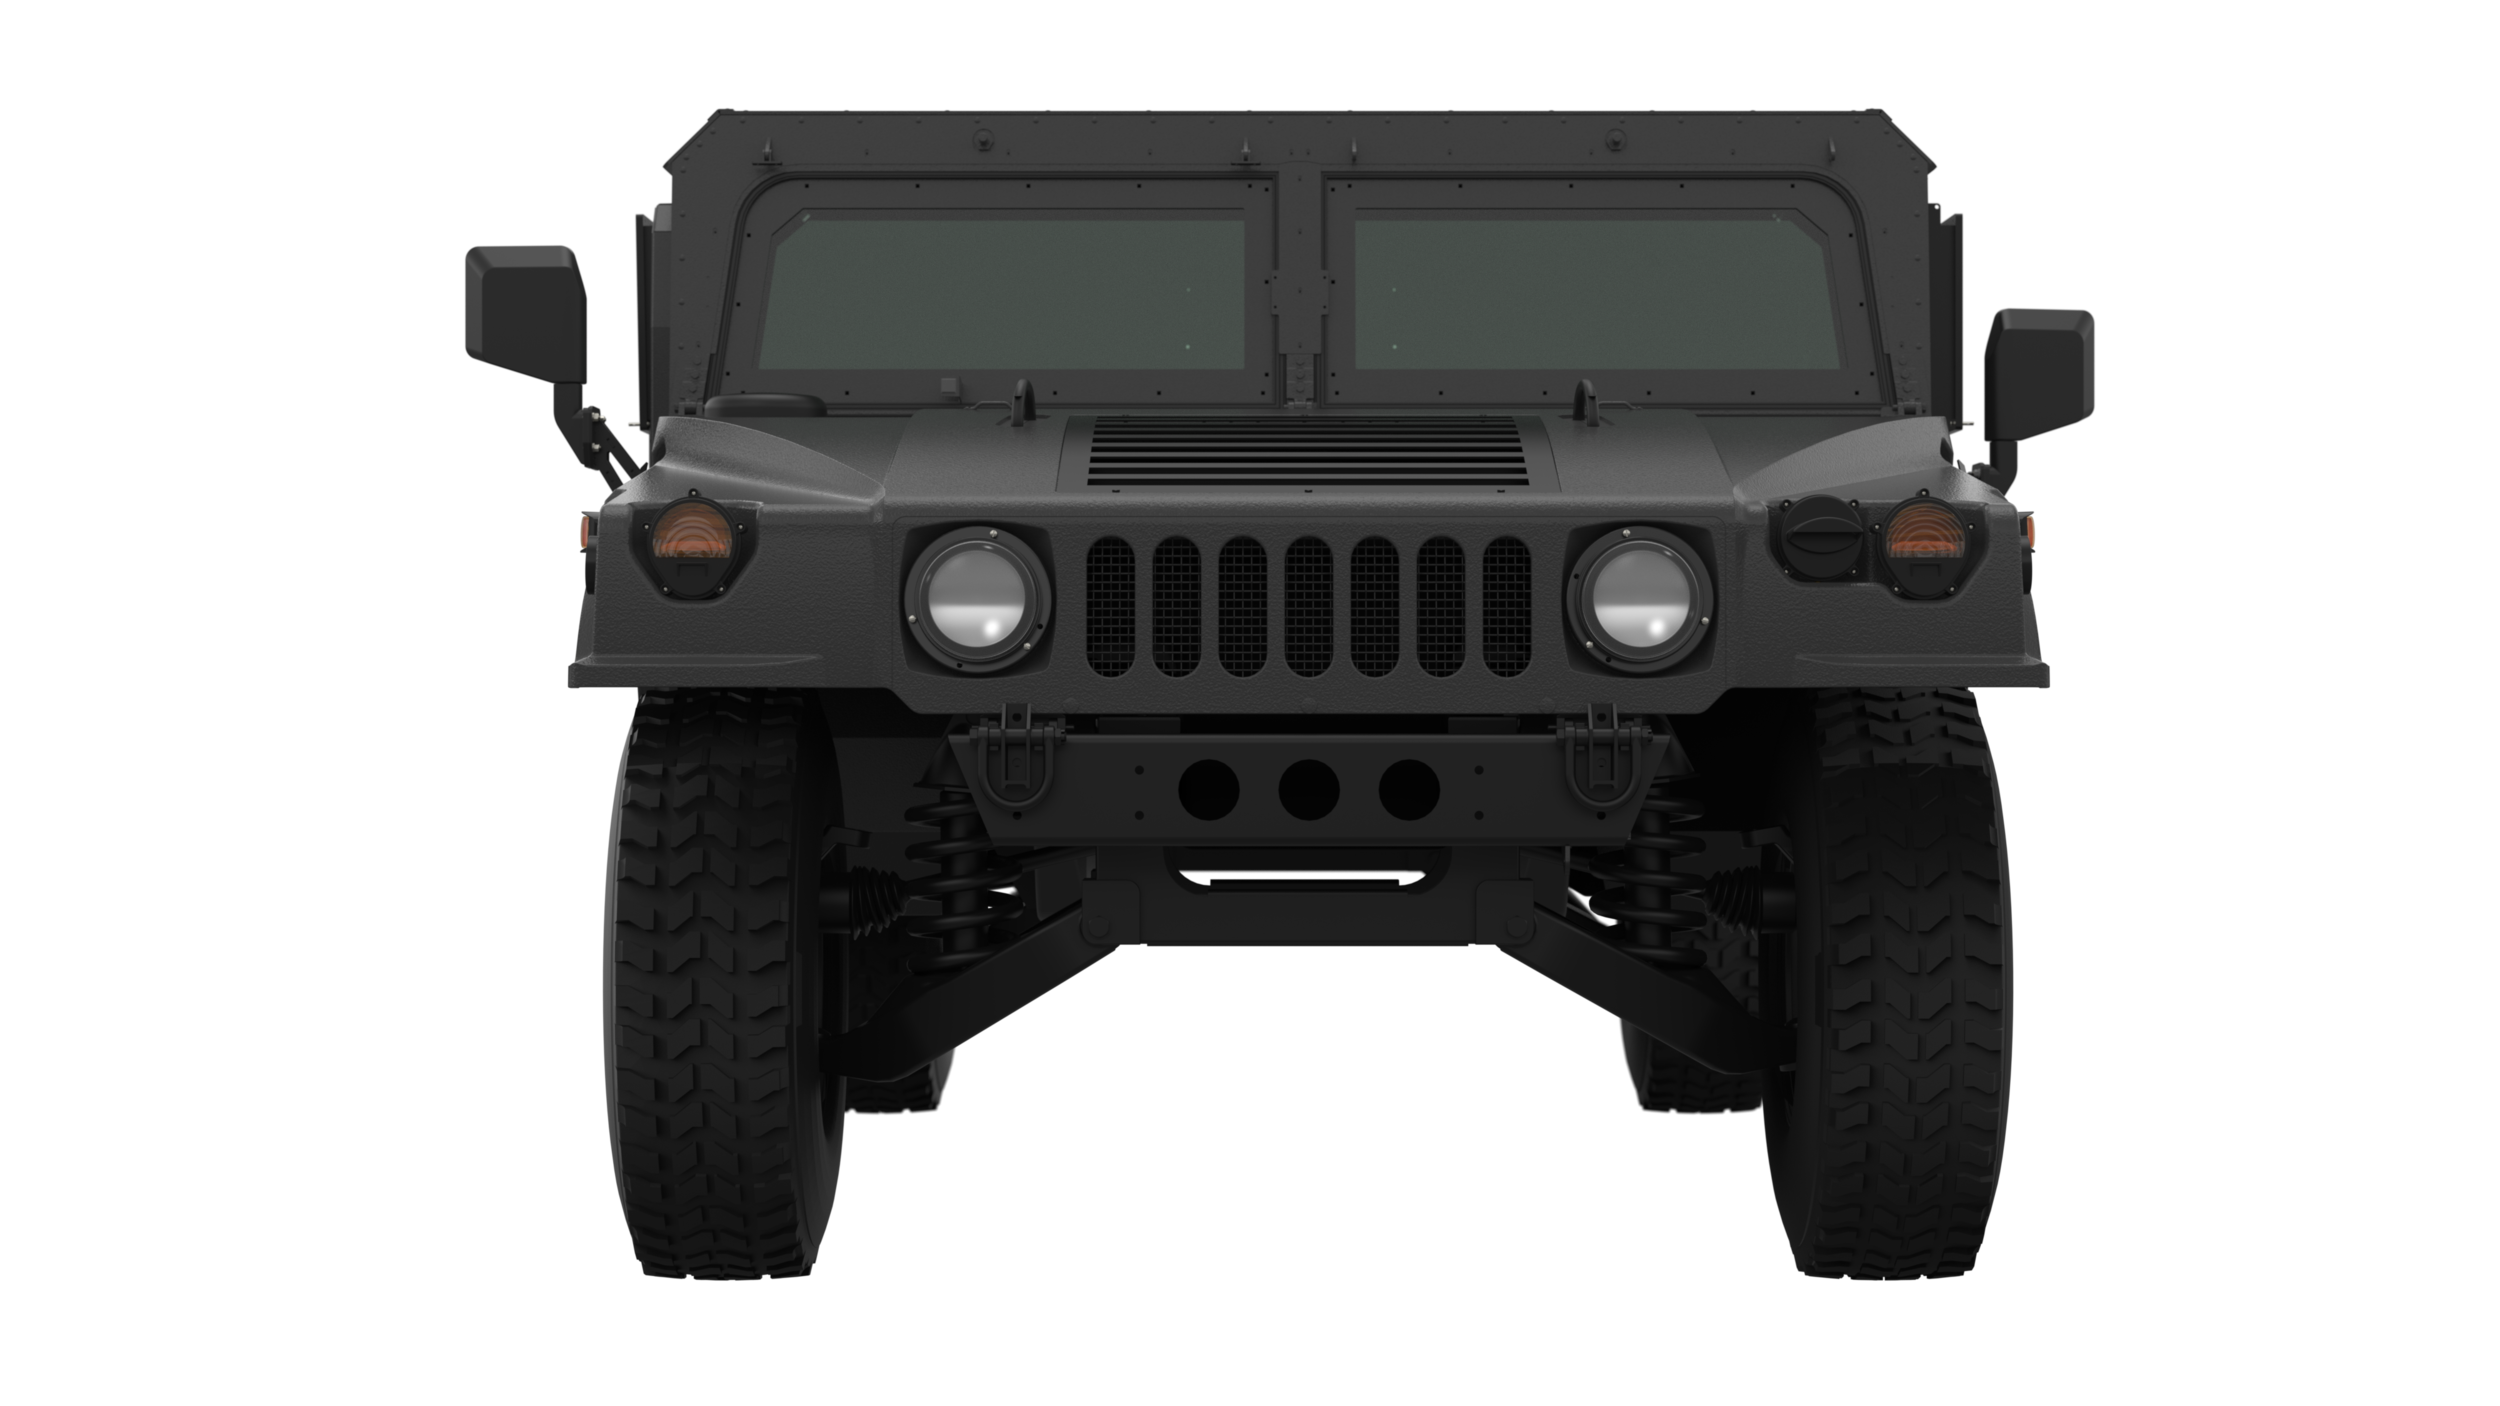 Armored Hummer H1 for Civilians like Humvee HMMWV — Plan B Trucks